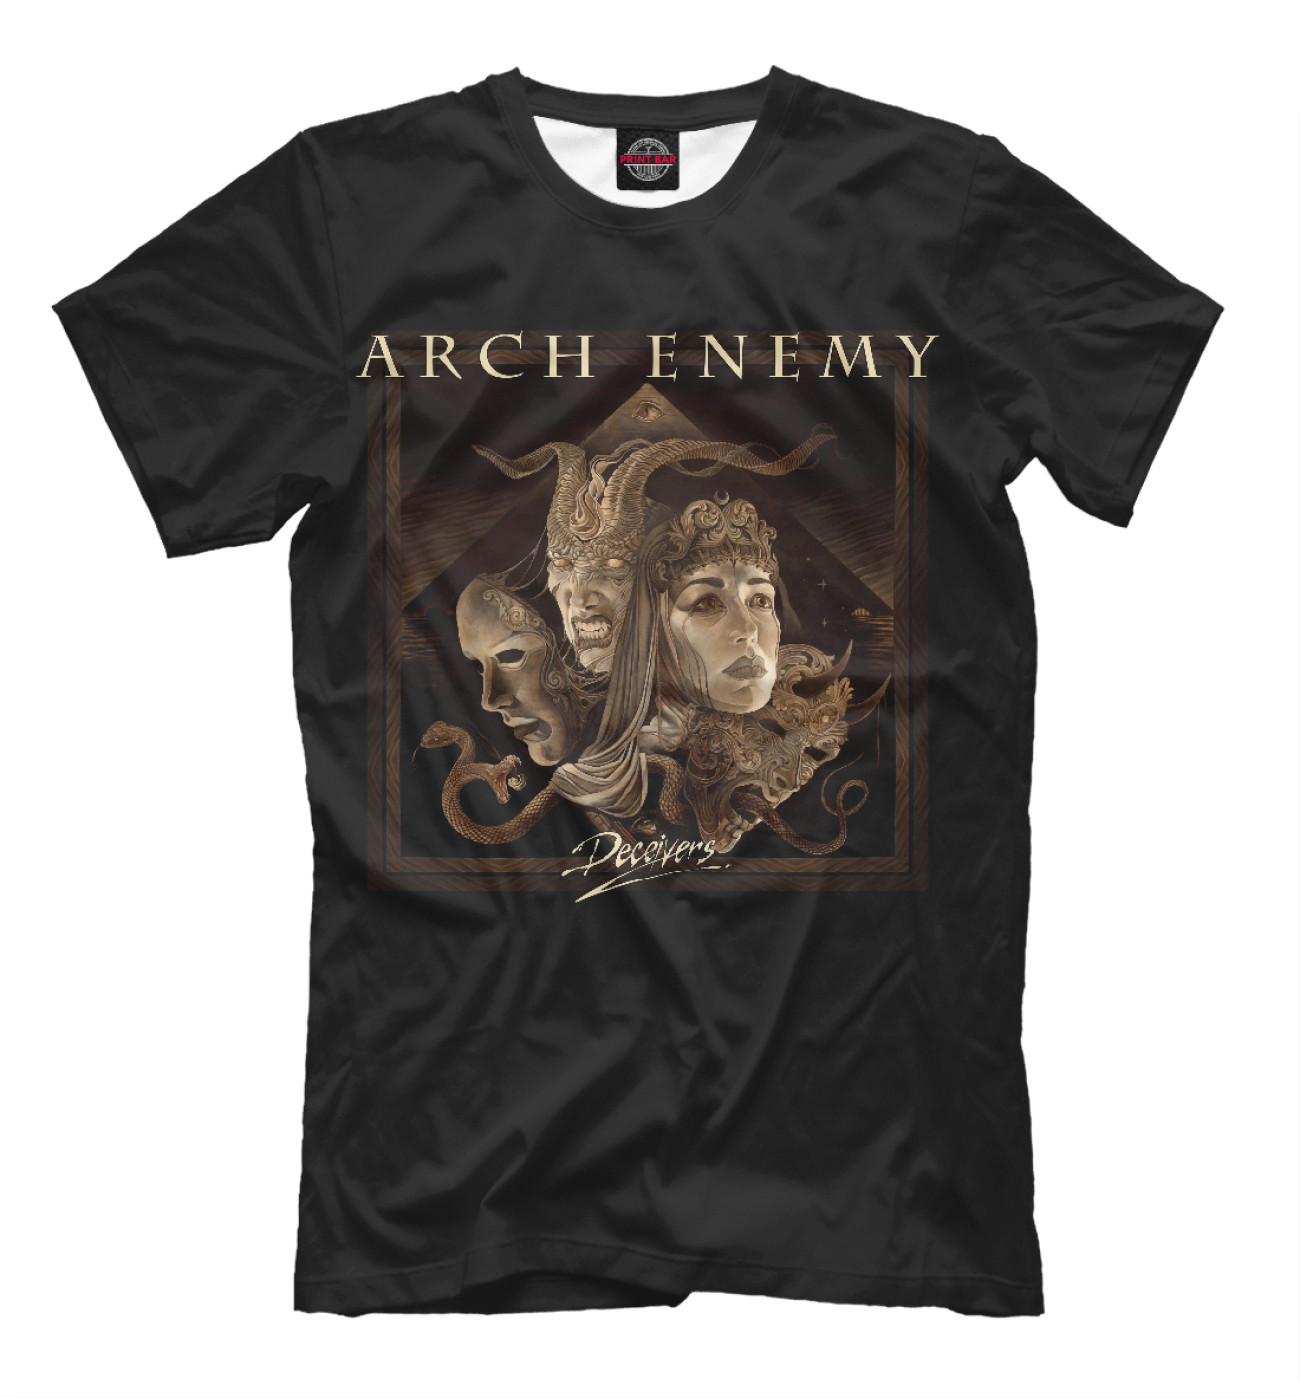 Мужская Футболка Arch Enemy - Deceivers, артикул: AEN-702429-fut-2